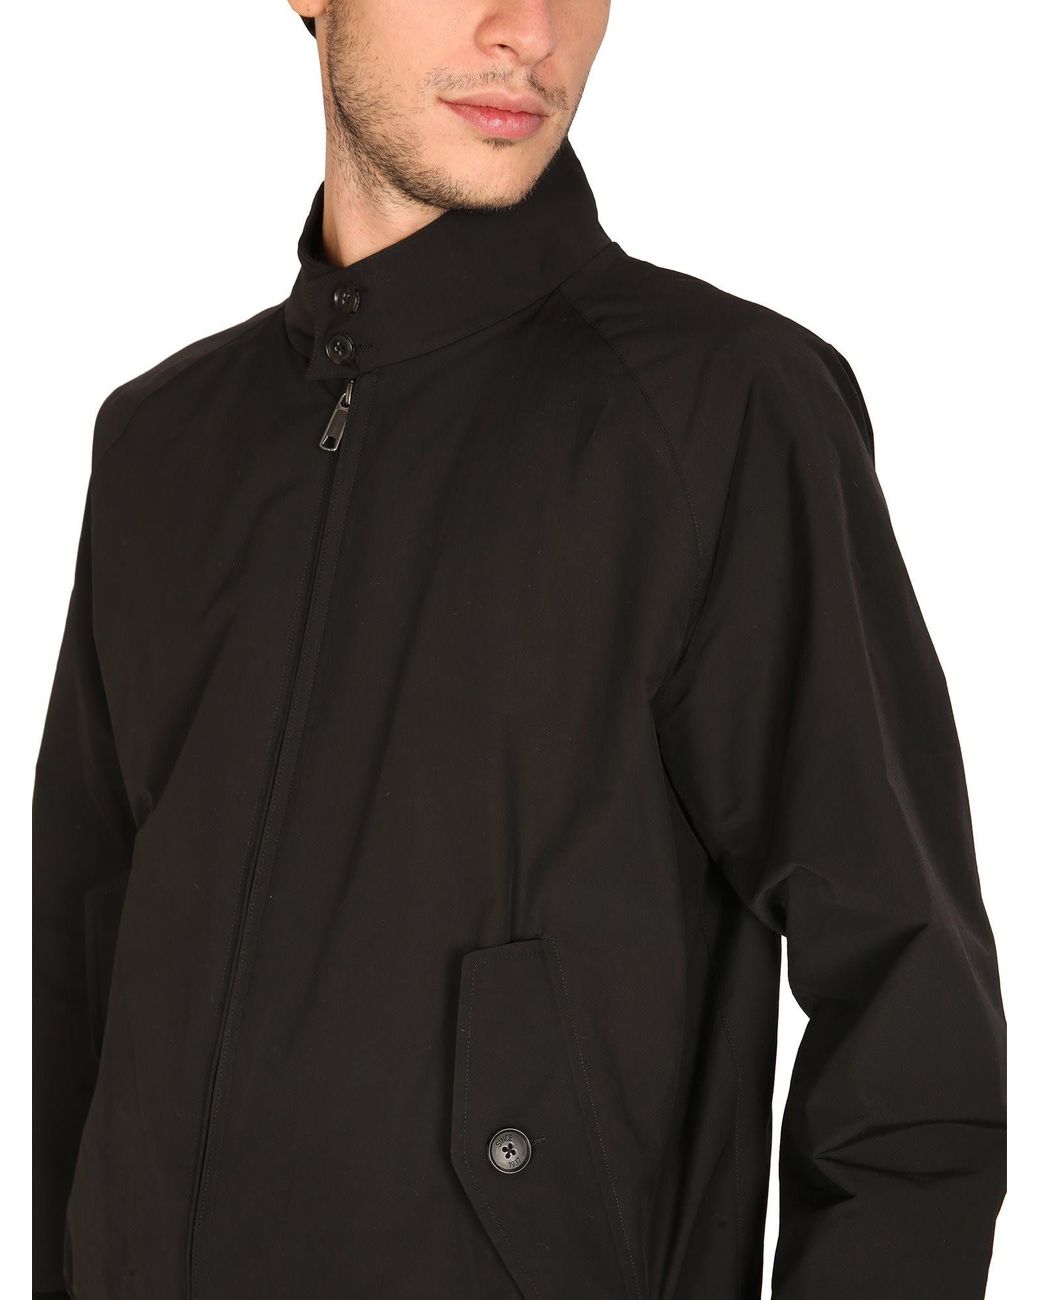 for Men Baracuta Synthetic Technical Fabric Jacket in Nero Black Mens Jackets Baracuta Jackets Save 23% 